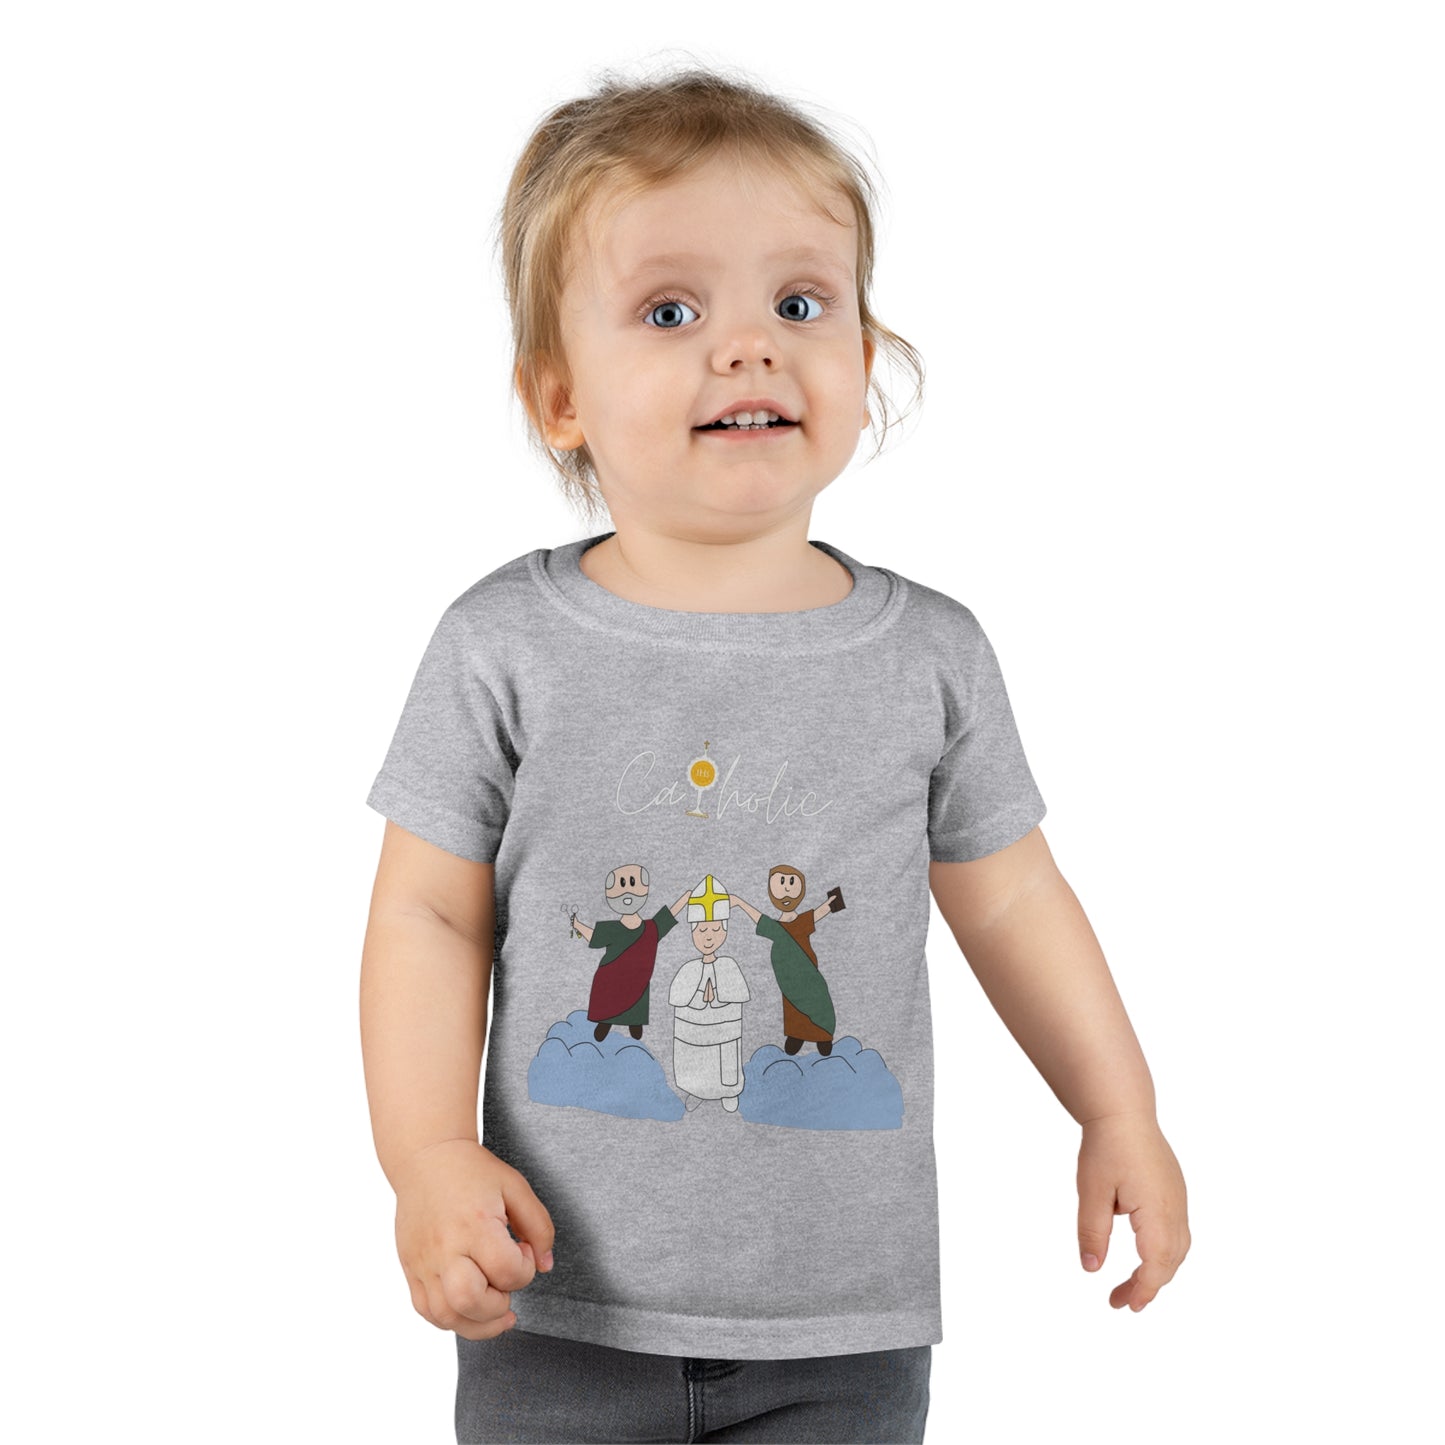 Catholic - Toddler T-shirt